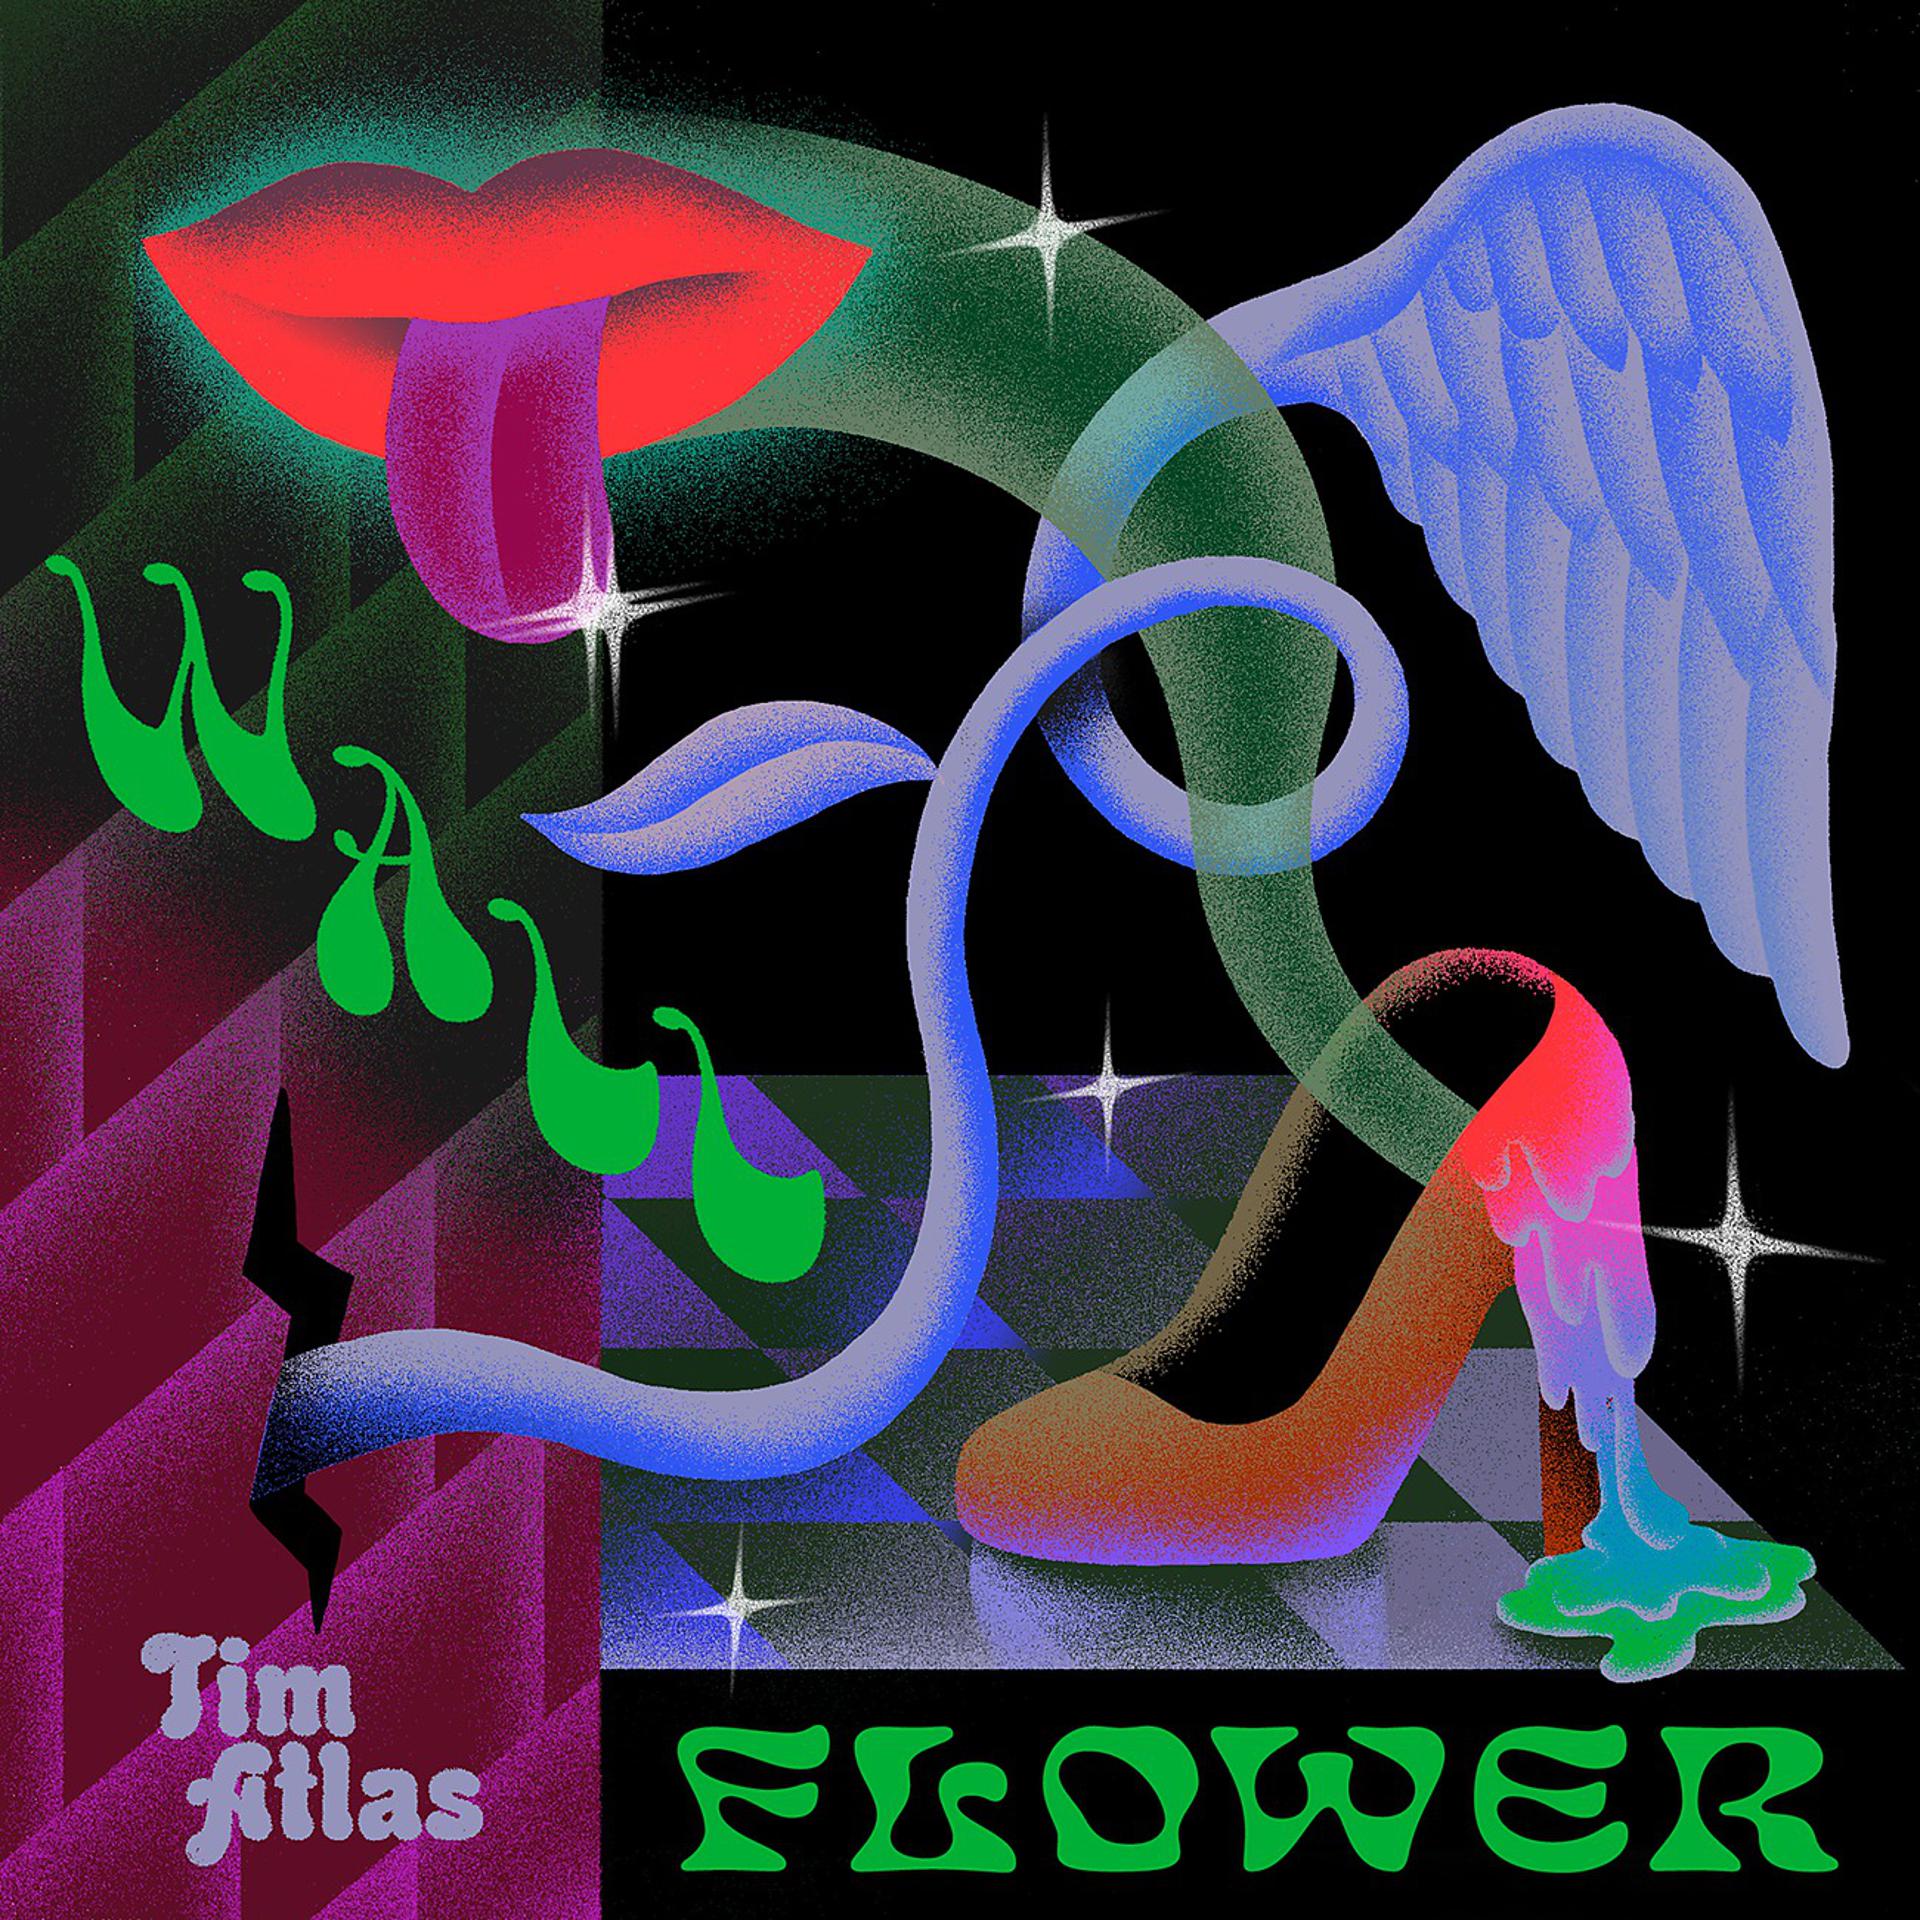 Постер альбома Wallflower